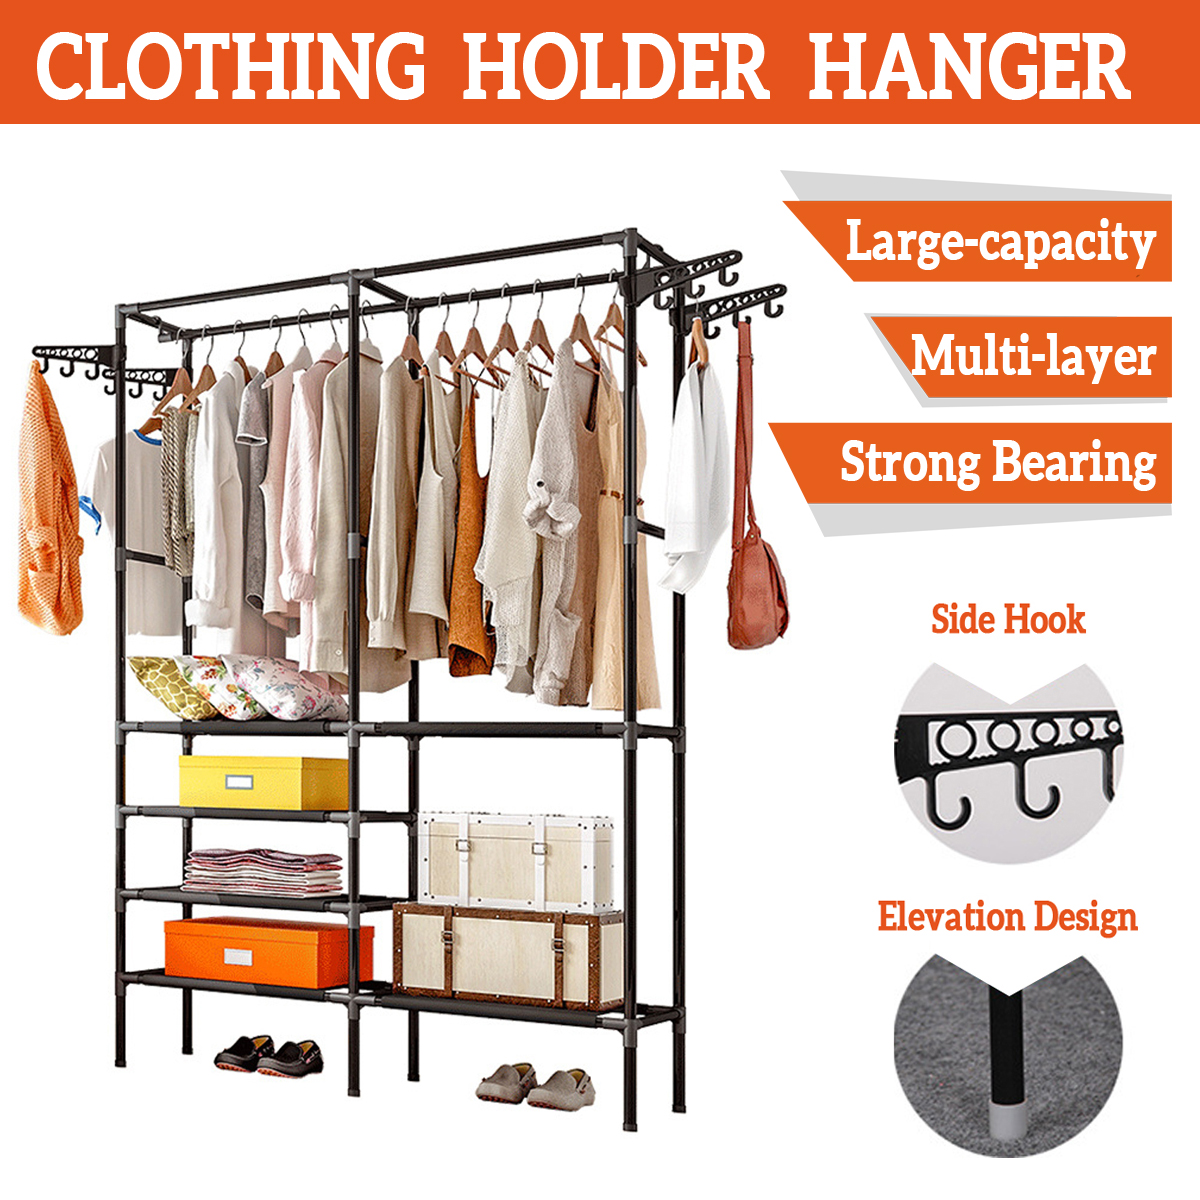 Standing-Landing-Wardrobe-Protable-Hanger-Holder-Durable-Clothes-Organizer-Household-Clothes-Rack-Sh-1606042-1